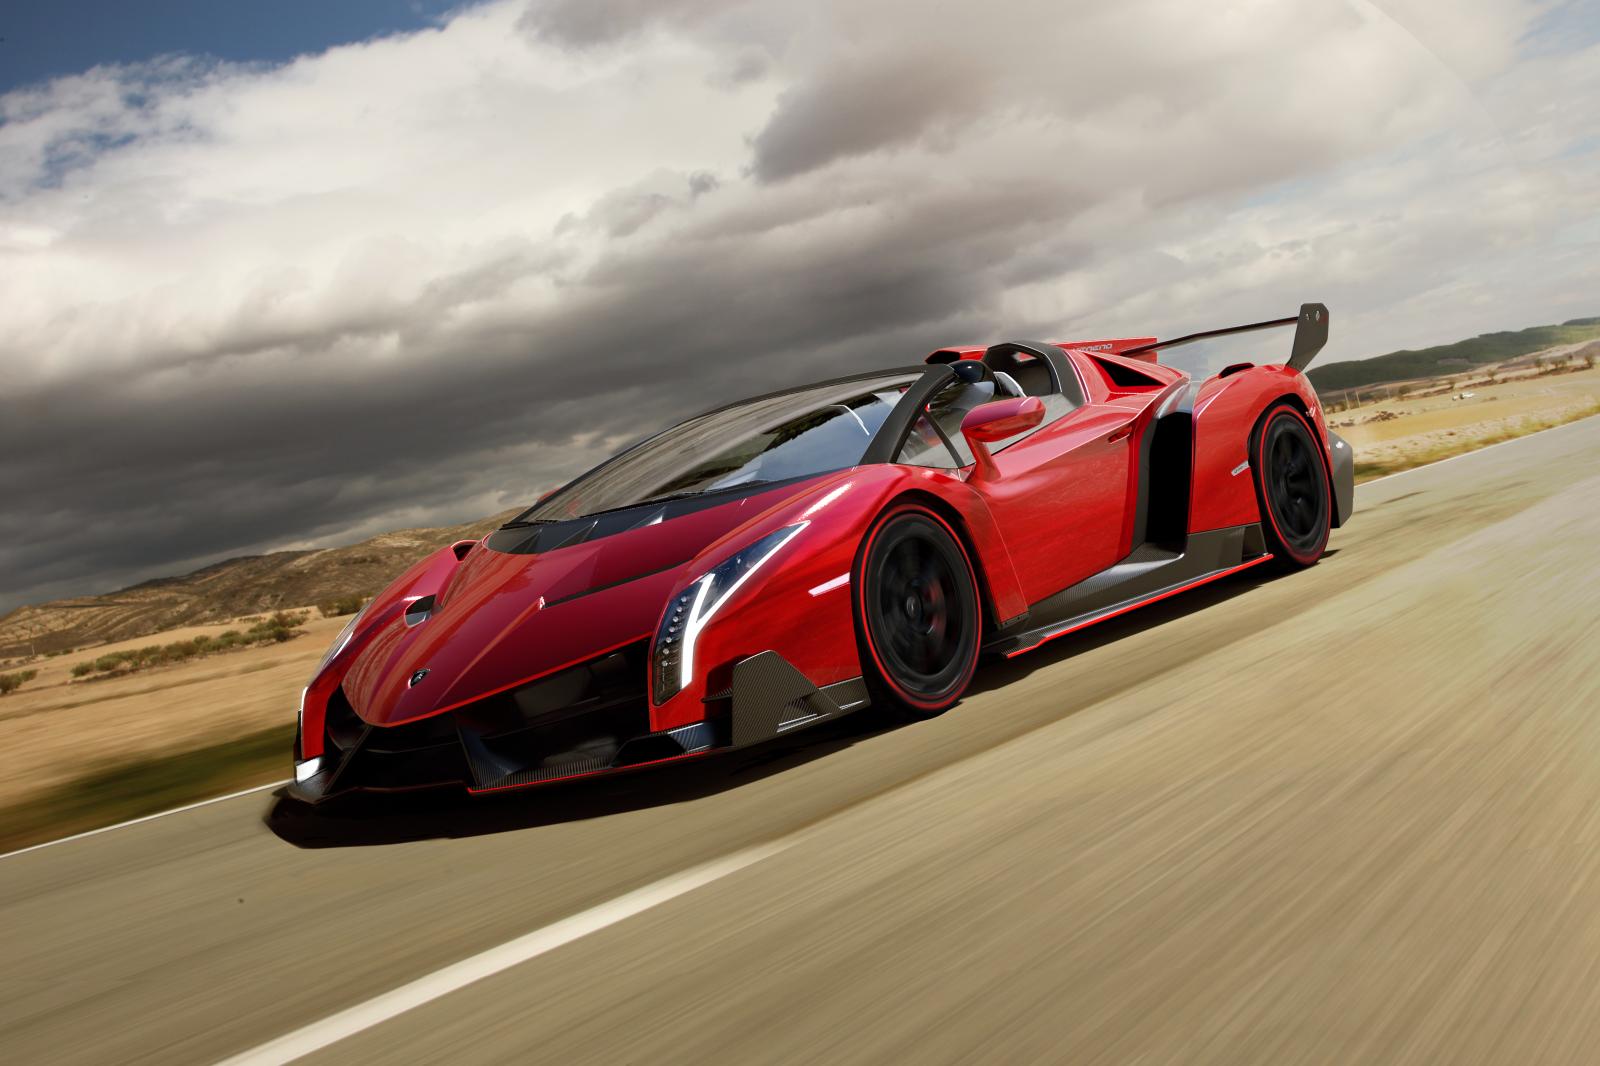 Lamborghini Cars - News: Veneno Roadster unveiled